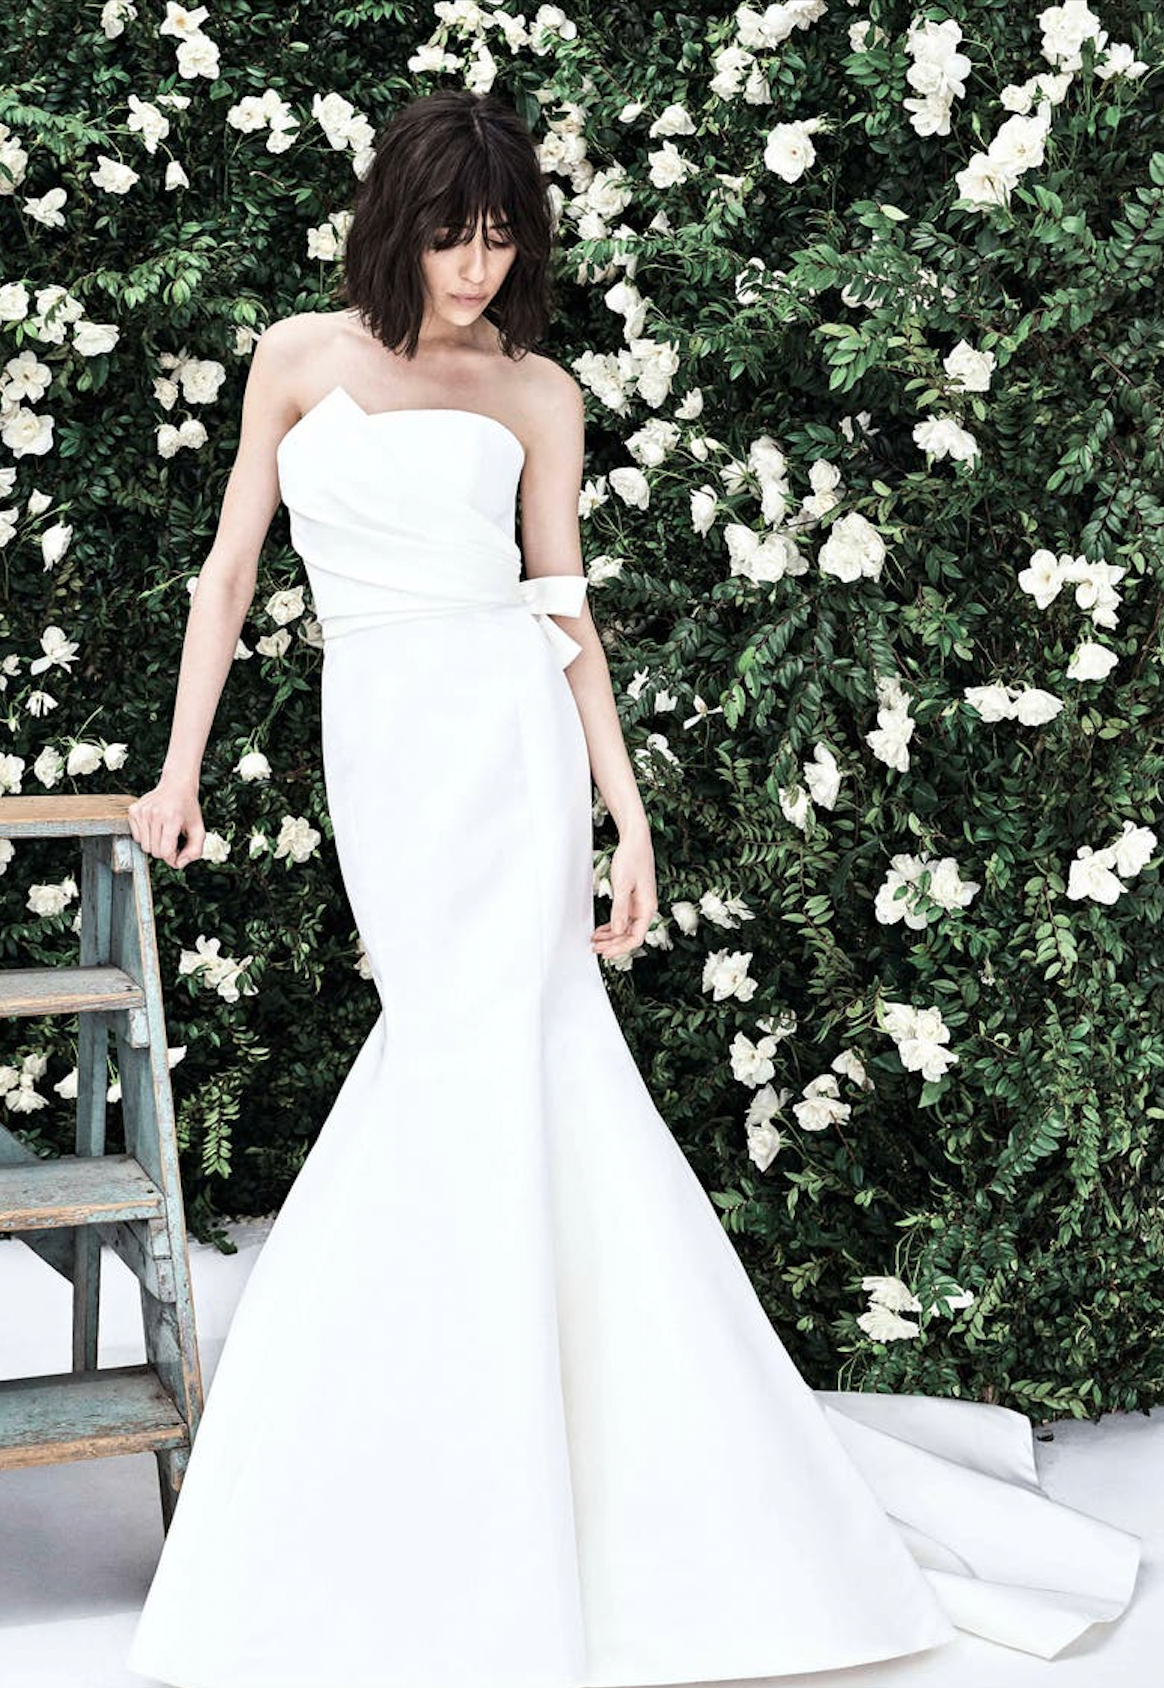 Classic & fitted Carolina Herrera strapless wedding dress.